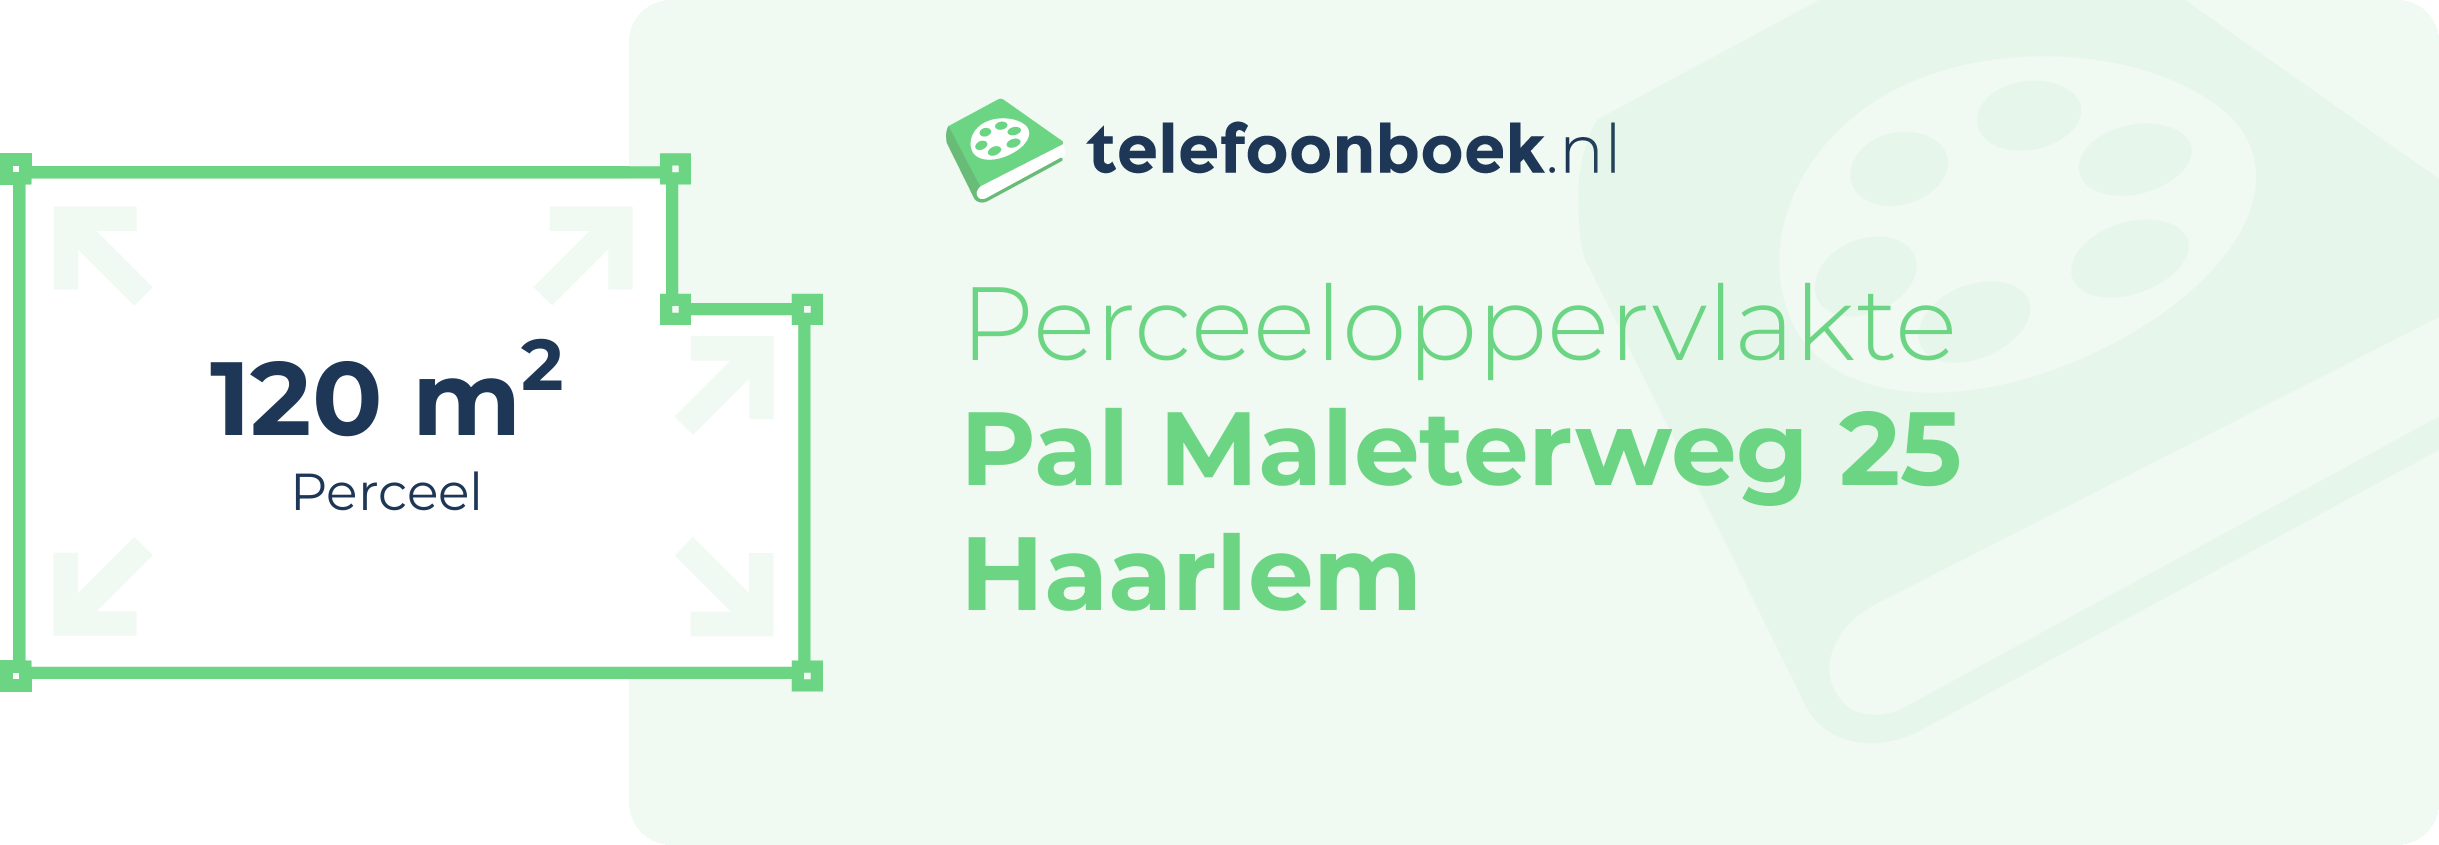 Perceeloppervlakte Pal Maleterweg 25 Haarlem